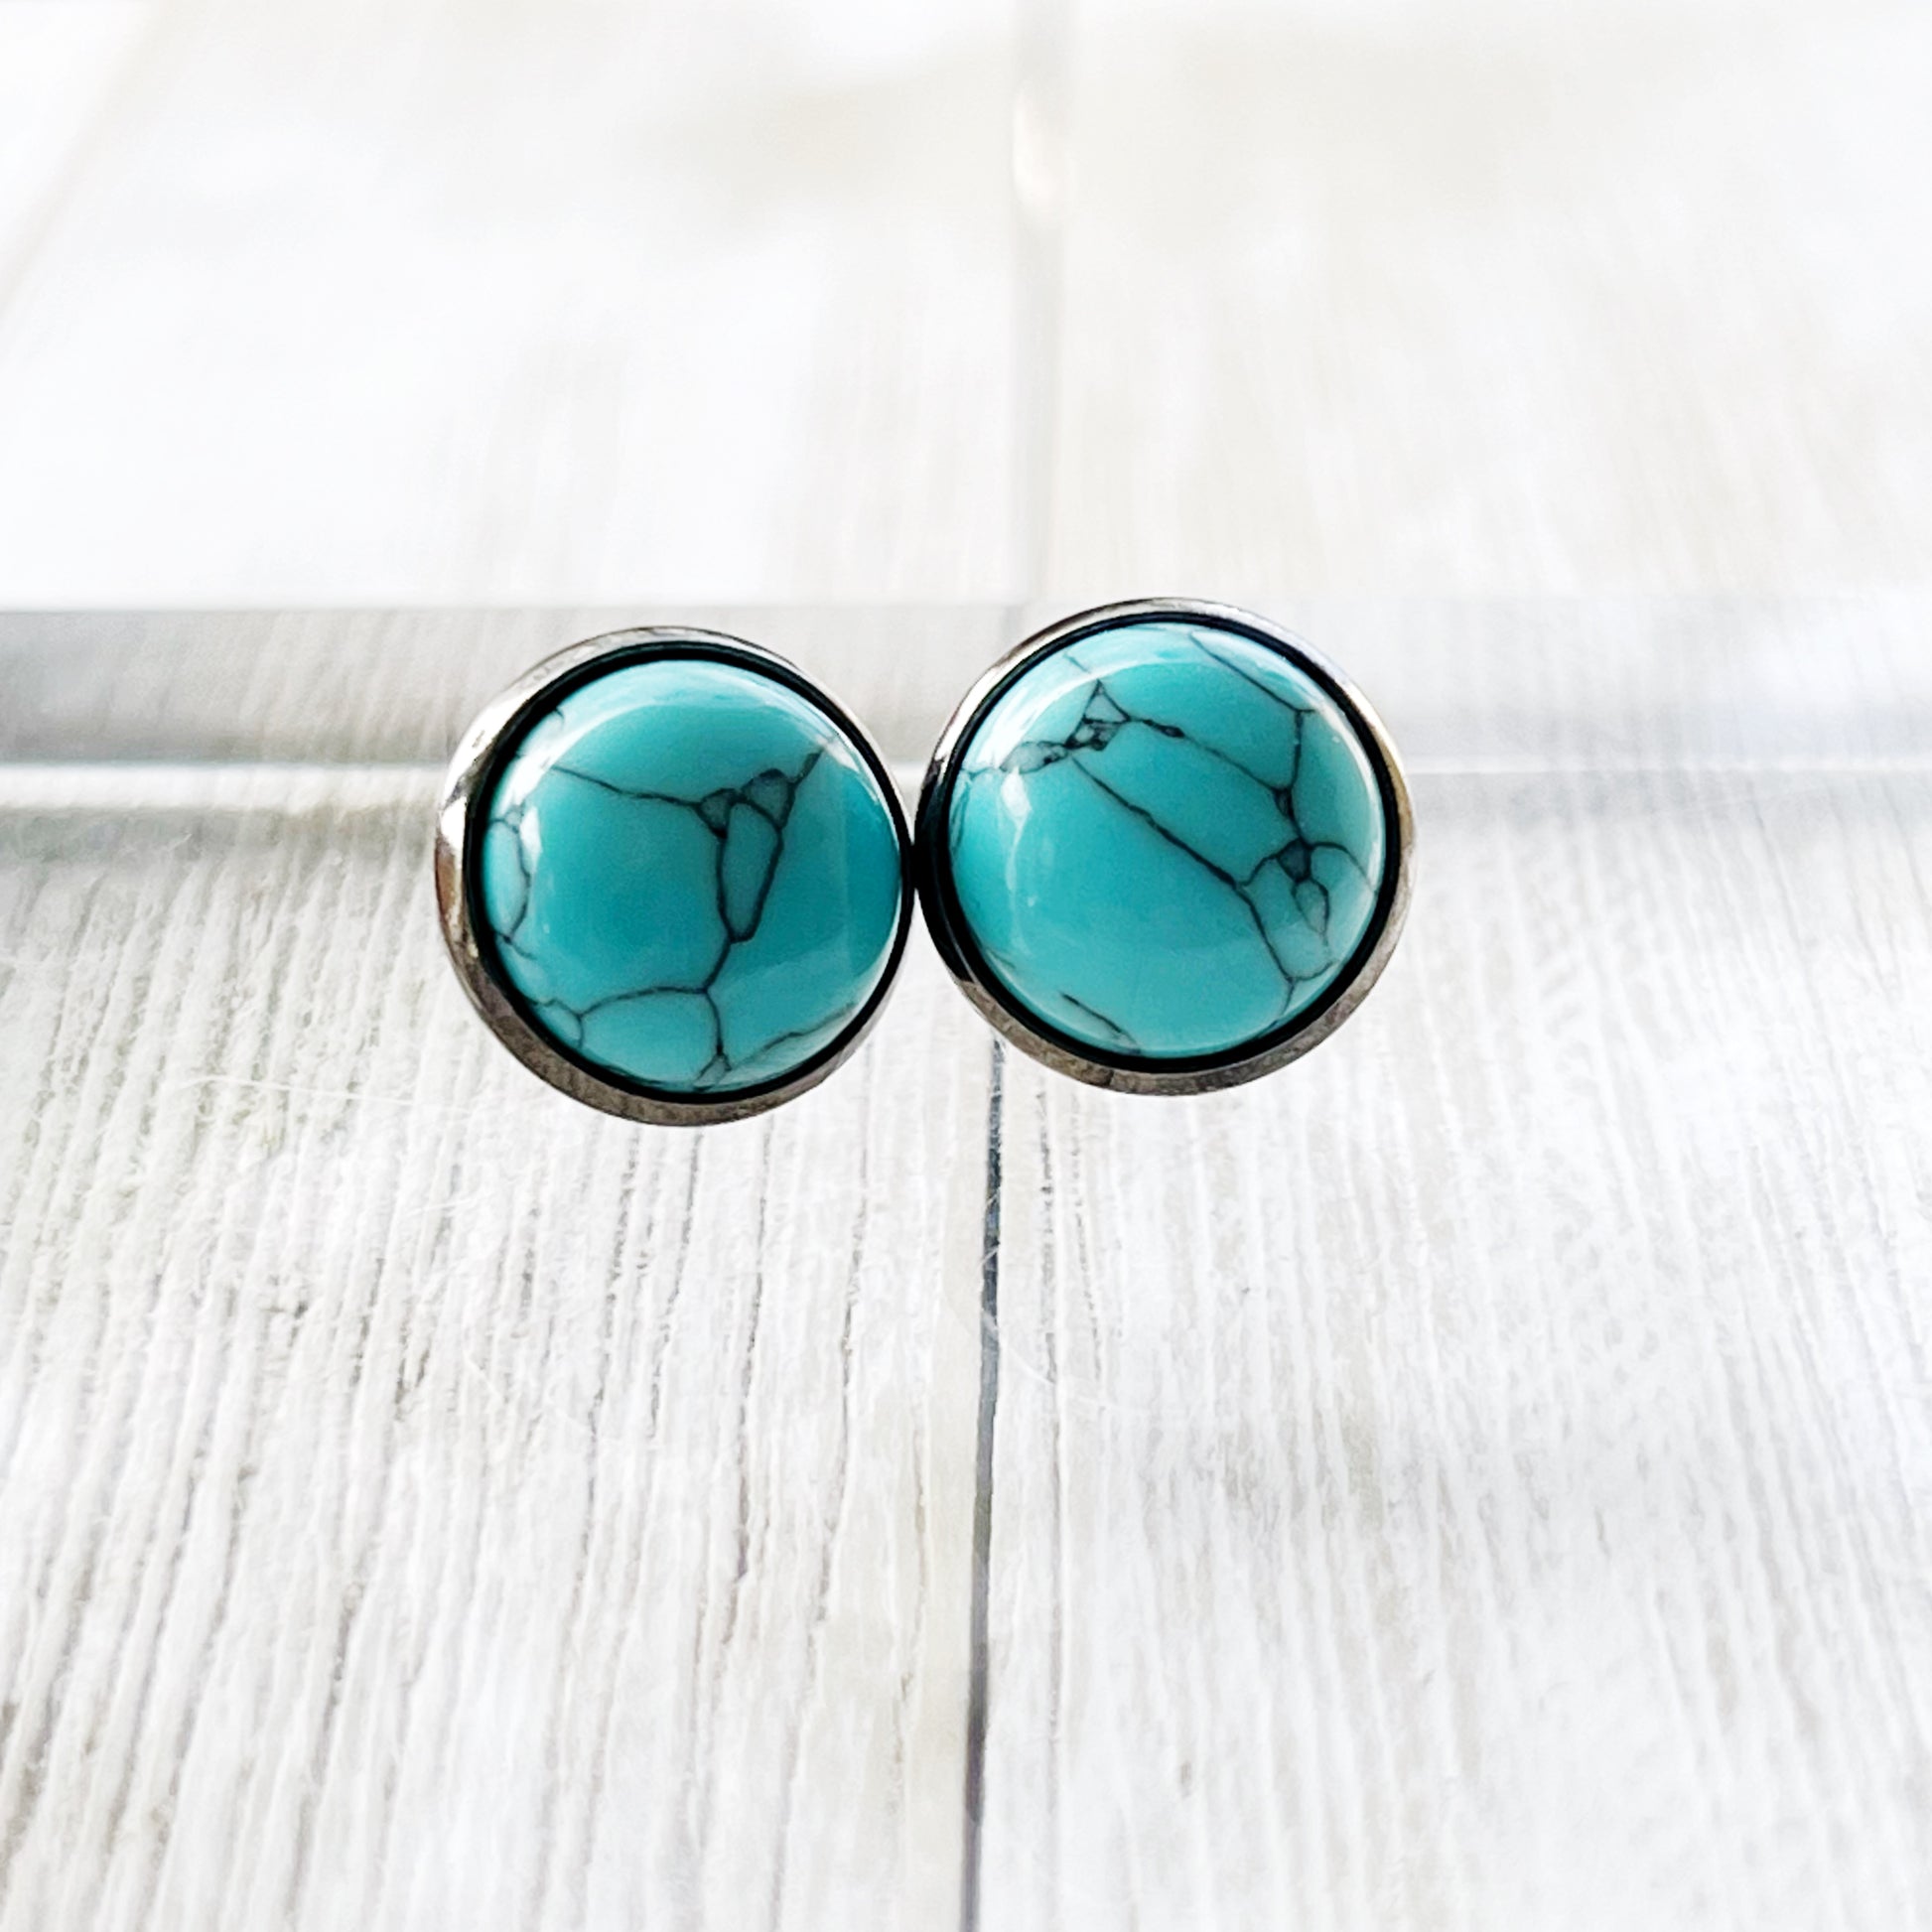 Turquoise 12mm Stud Earrings